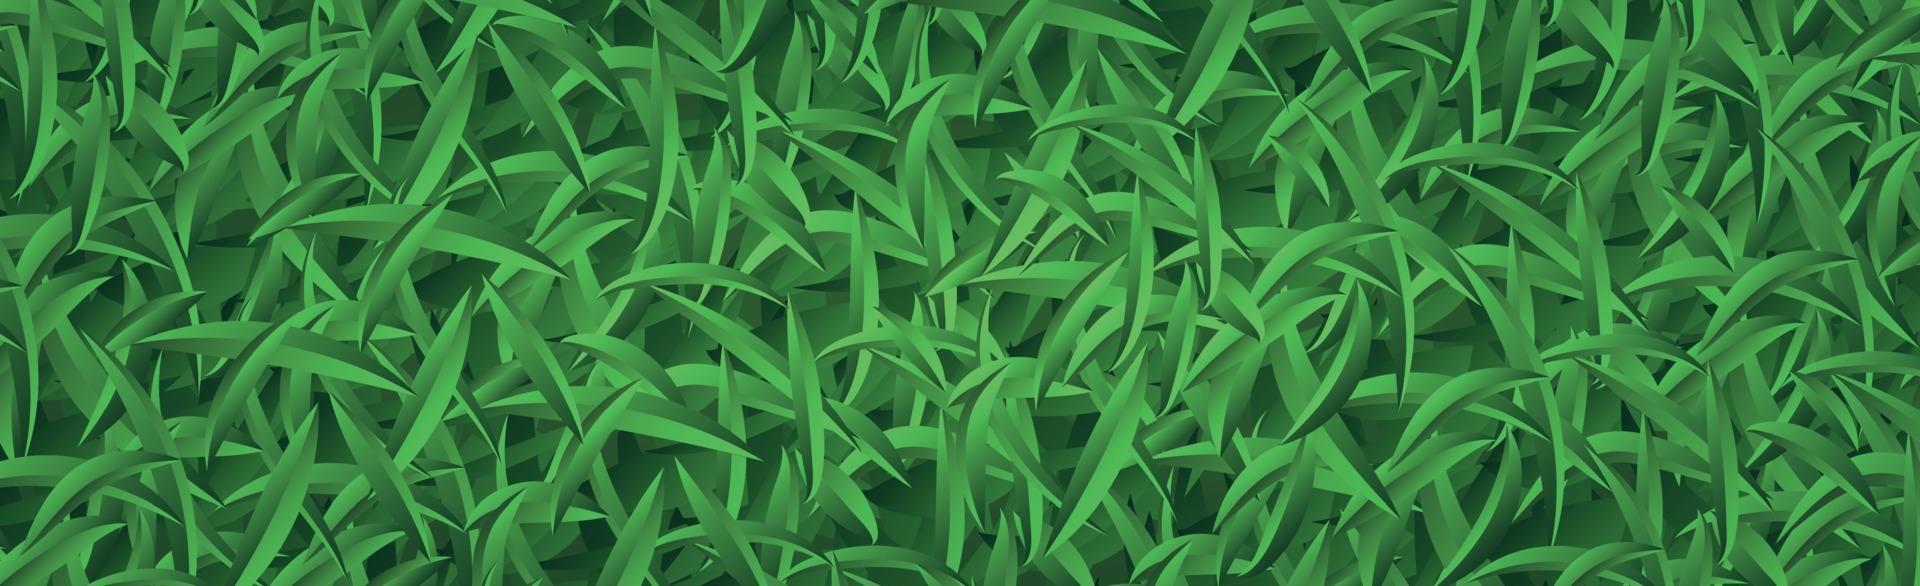 herbe verte lumineuse réaliste, fond de pelouse - vecteur